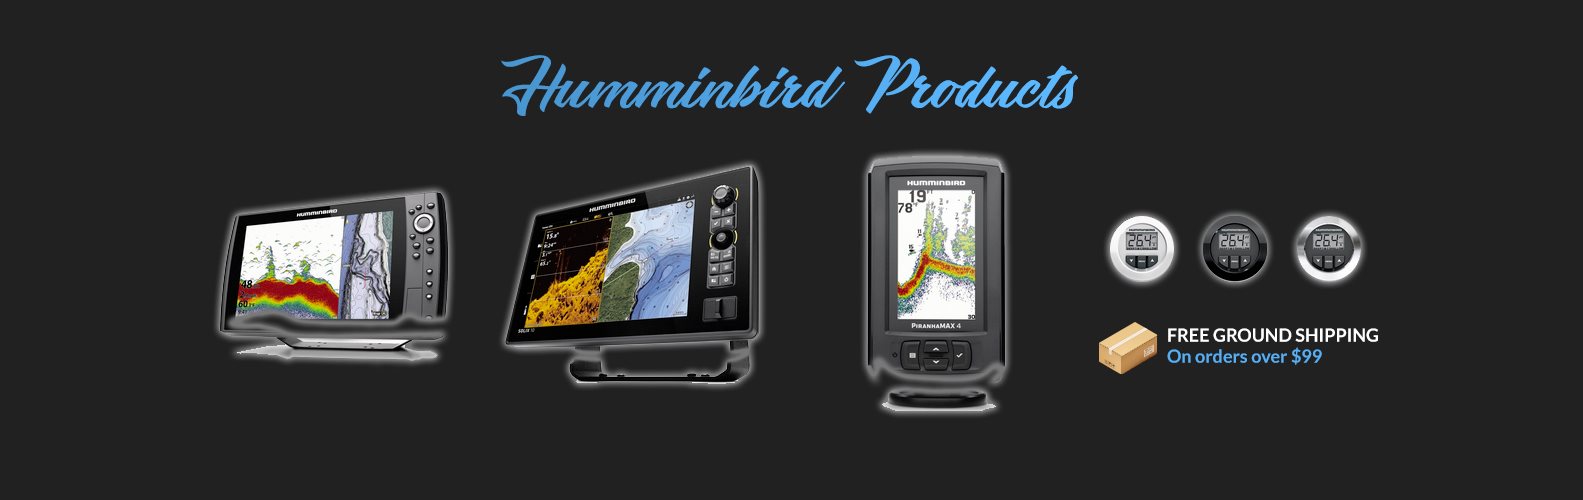 Humminbird-Products-004